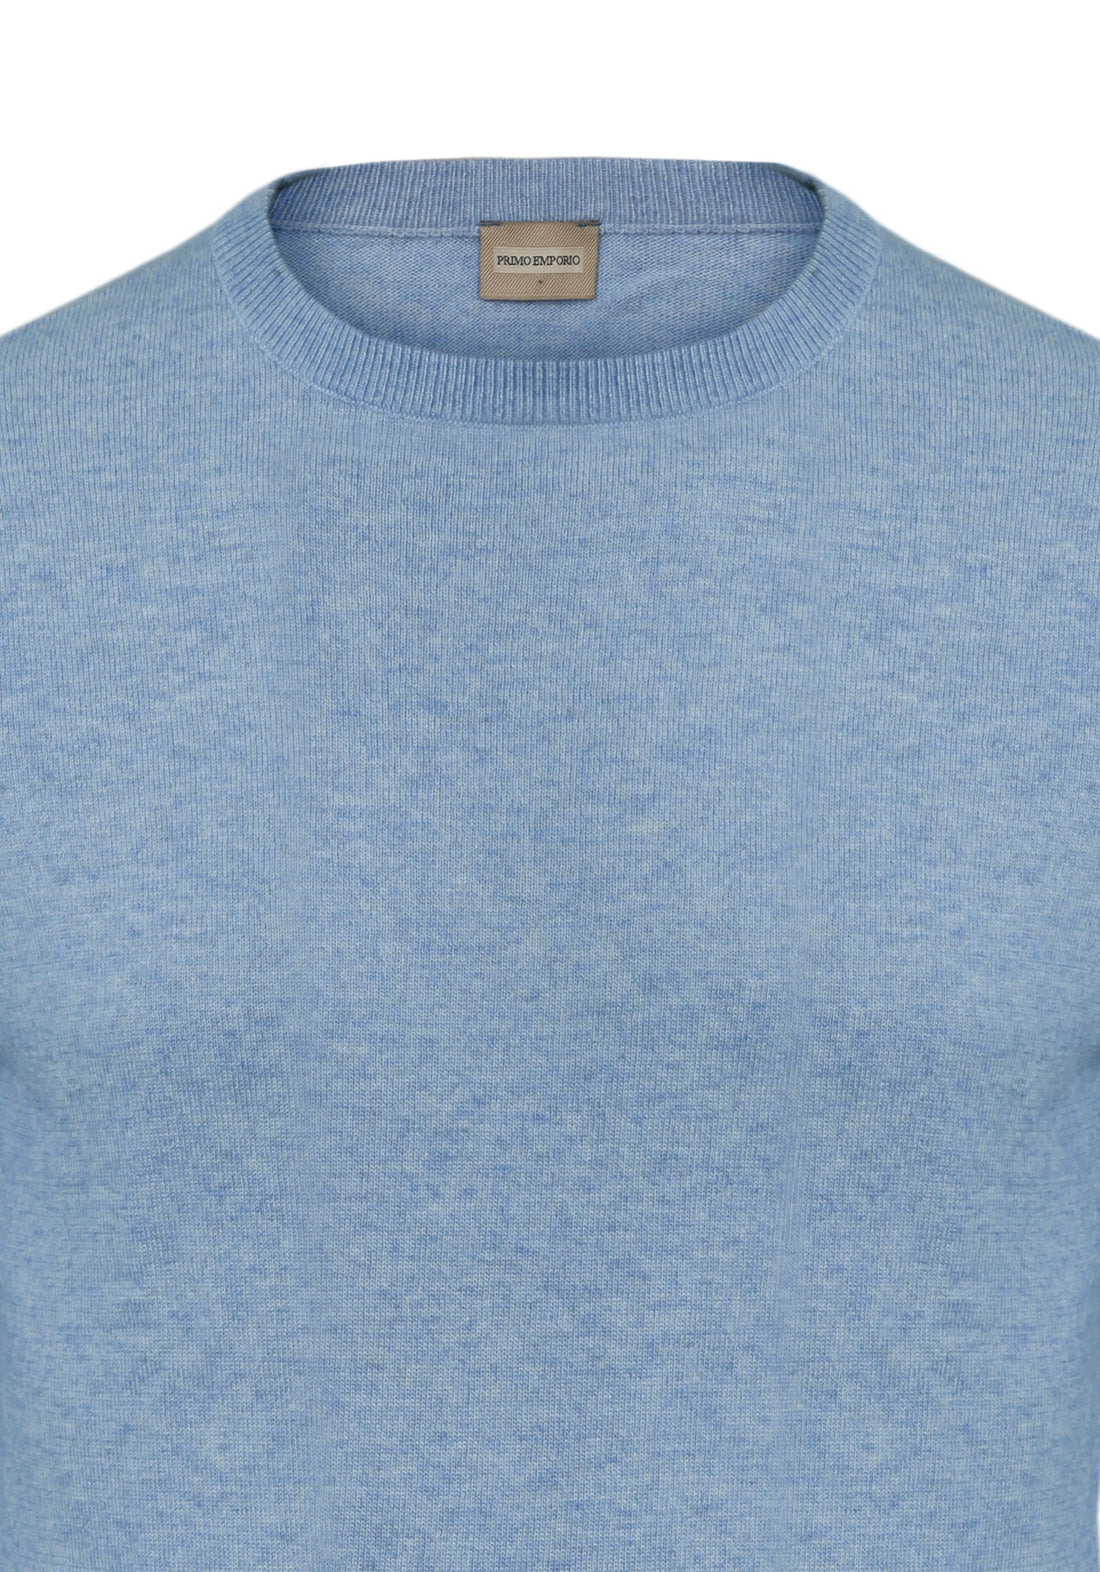 Wool &amp; Cashmere Round Neck Sweater - Light Blue -